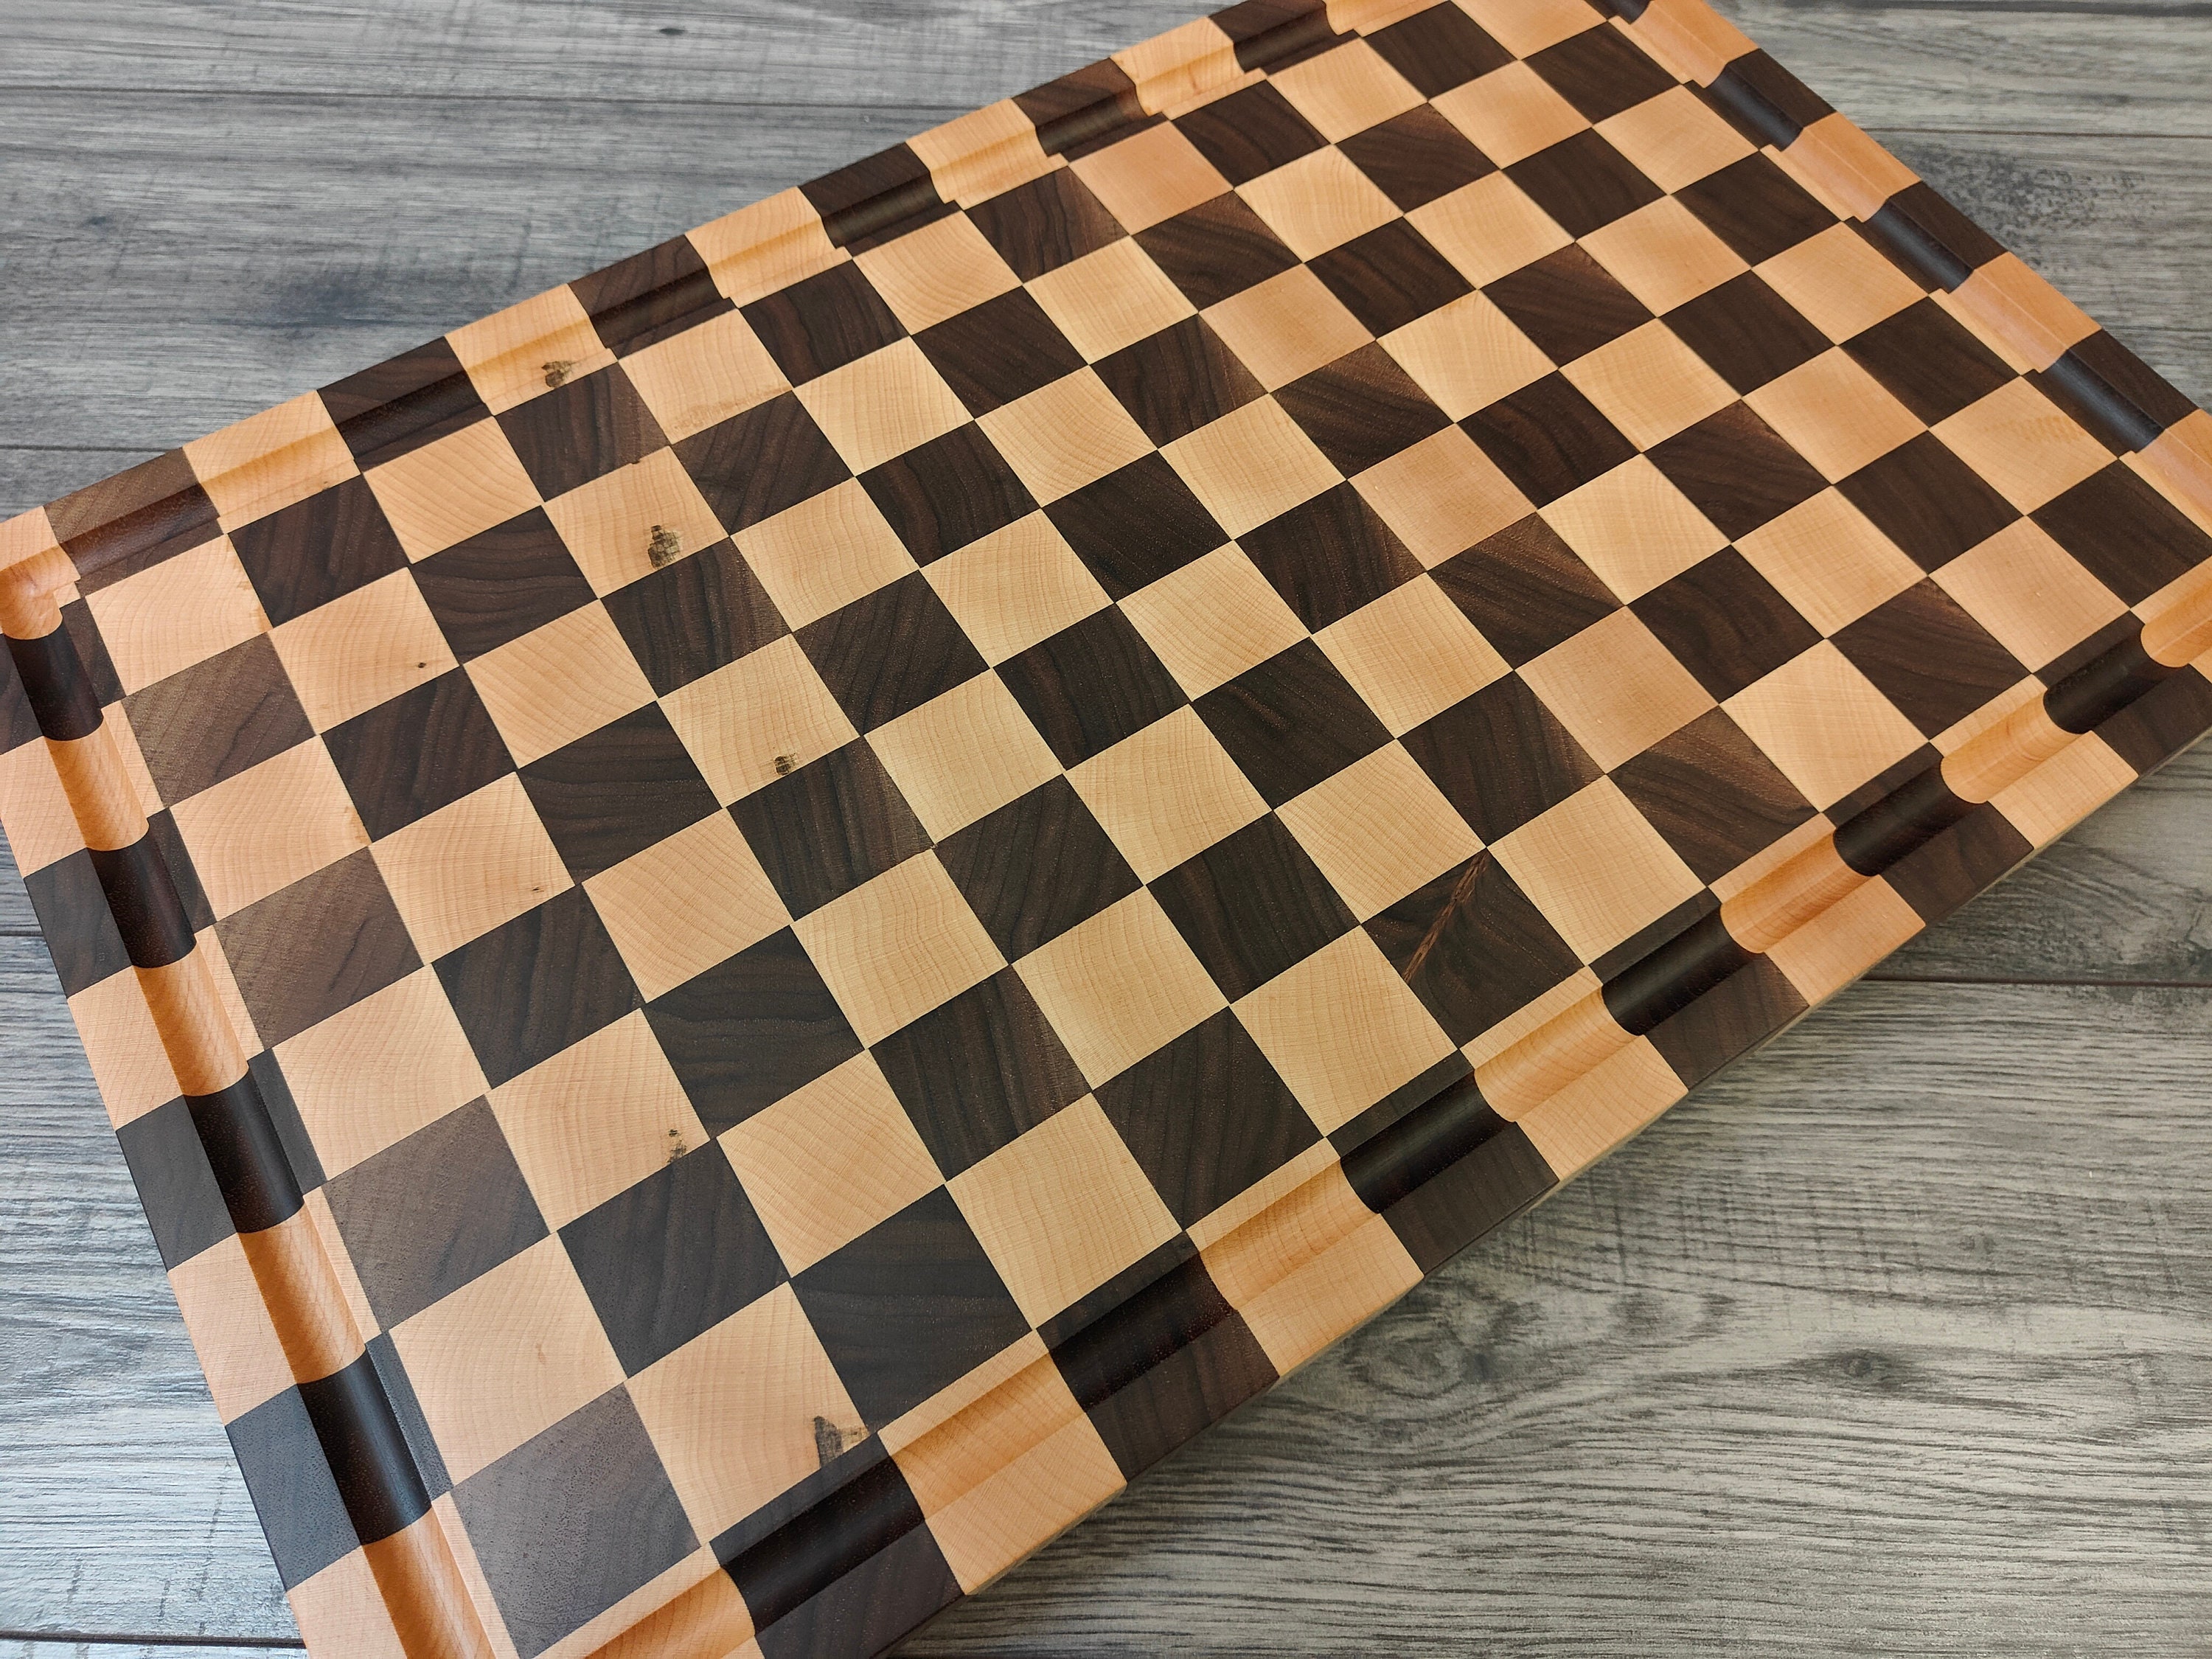 Walnut & Sugar Maple Checkered End Grain Cutting Boards